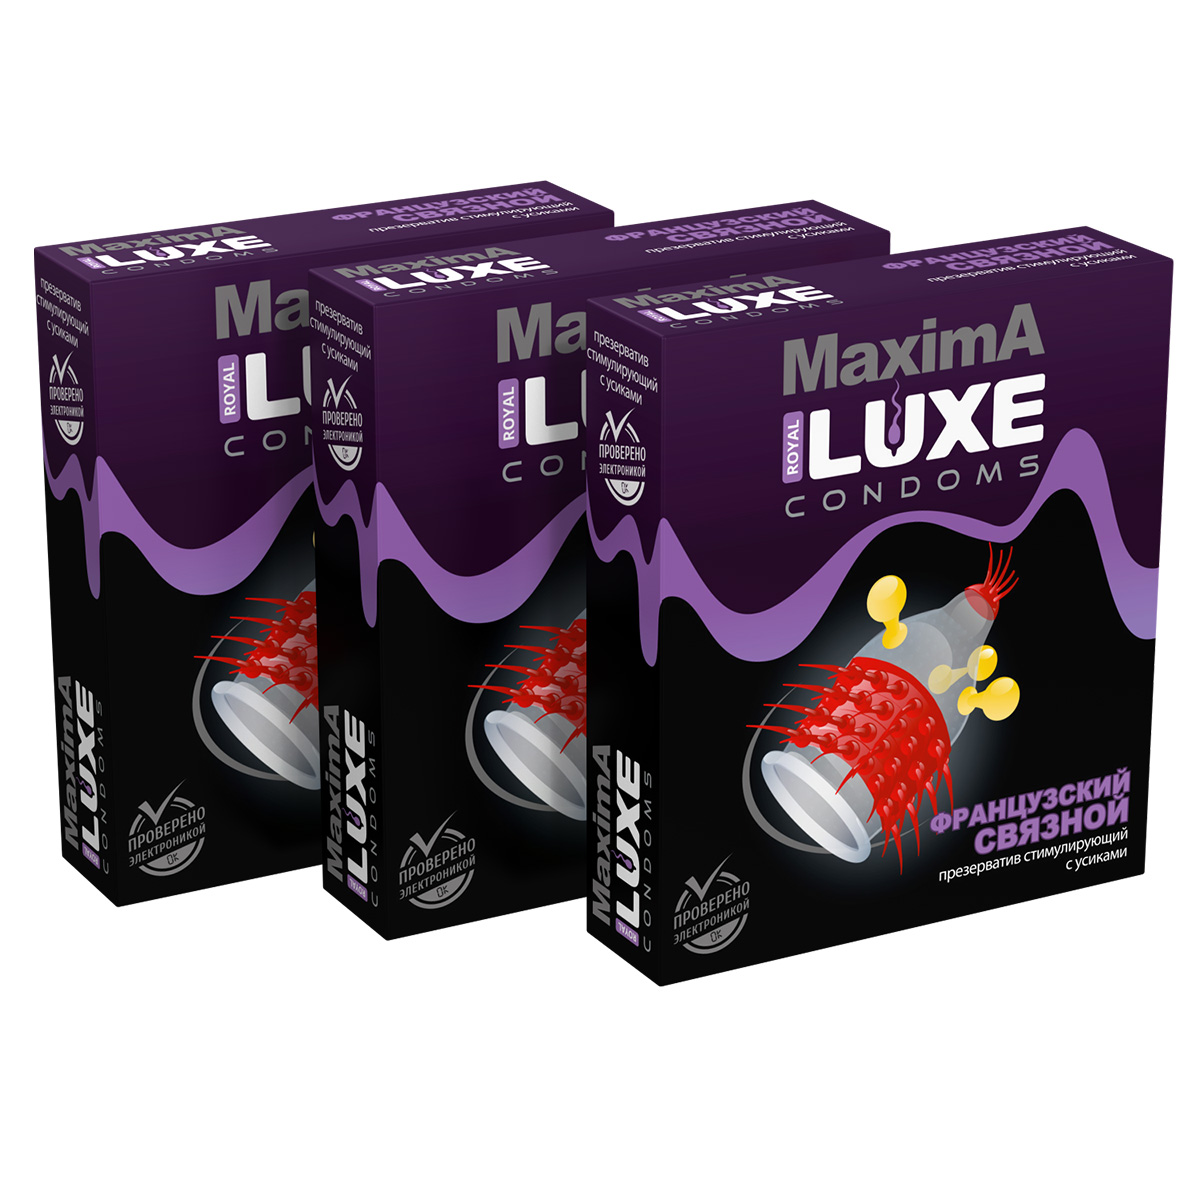 Презервативы Luxe Maxima Французский Связной комплект из 3 упаковок